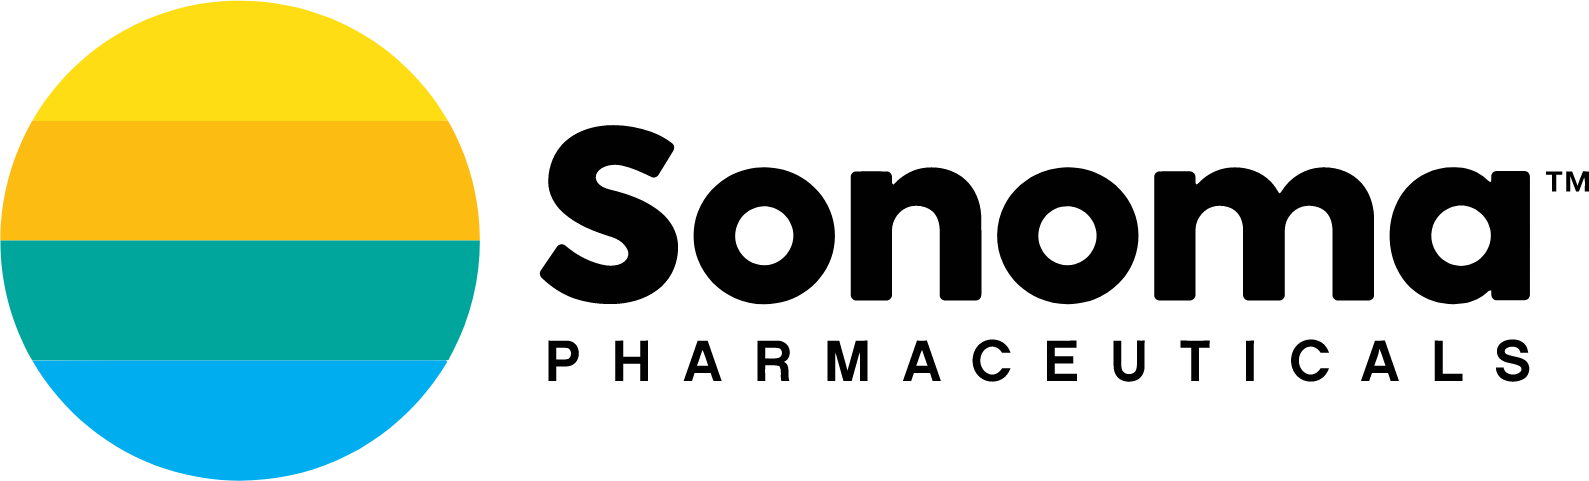 Sonoma Pharmaceuticals logo large (transparent PNG)